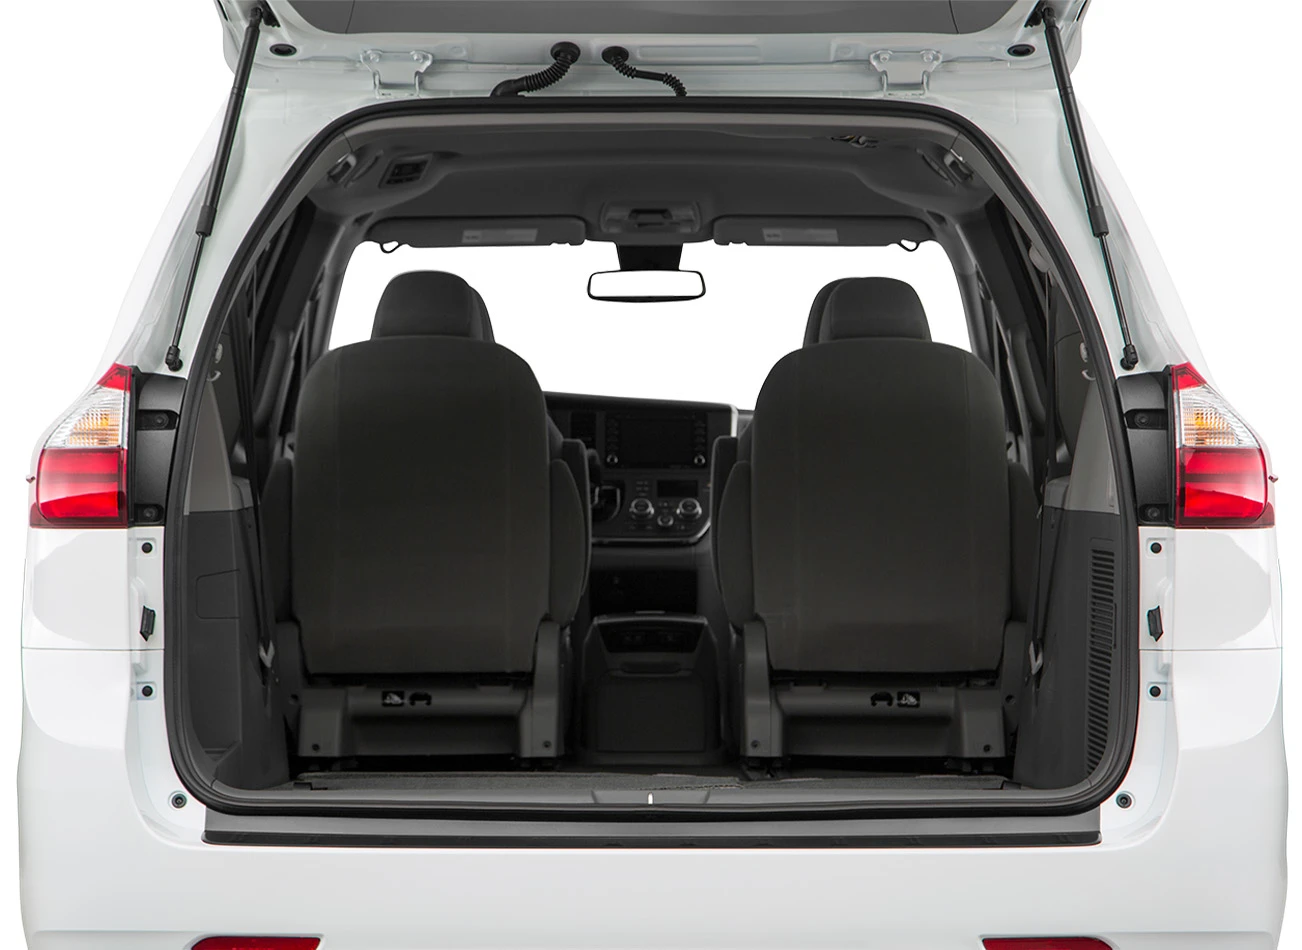 2020 Toyota Sienna: Cargo | CarMax